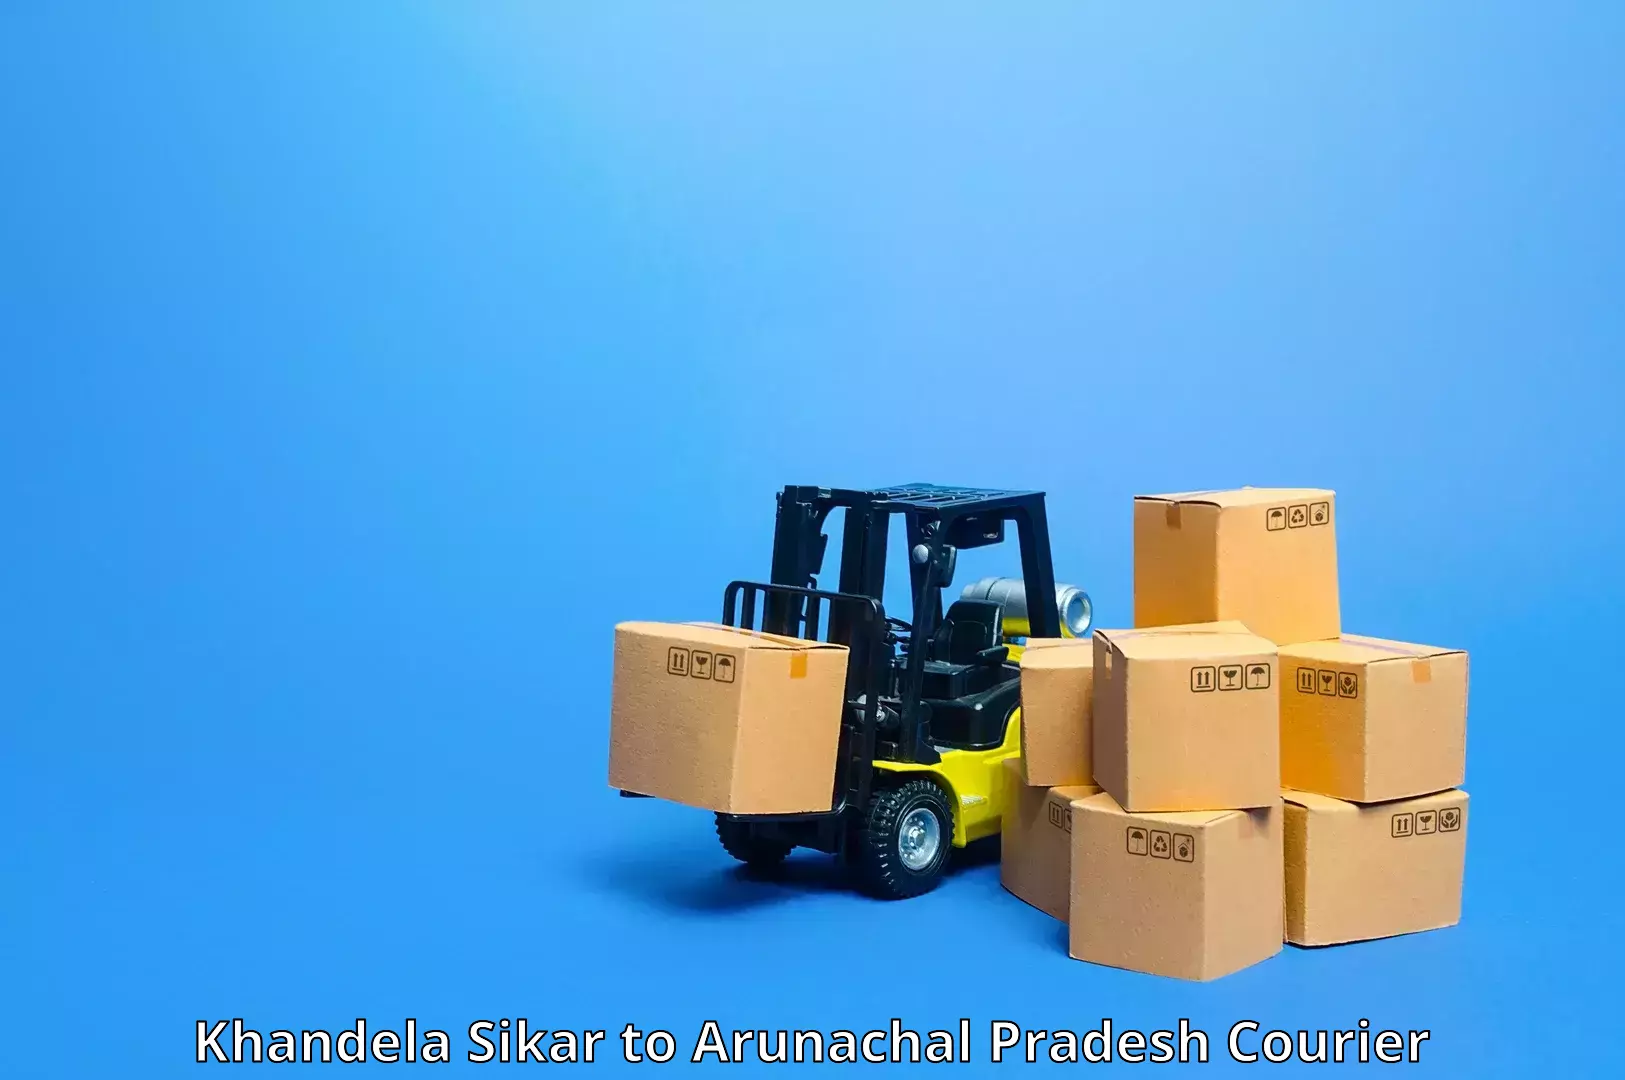 Courier service comparison Khandela Sikar to Dirang